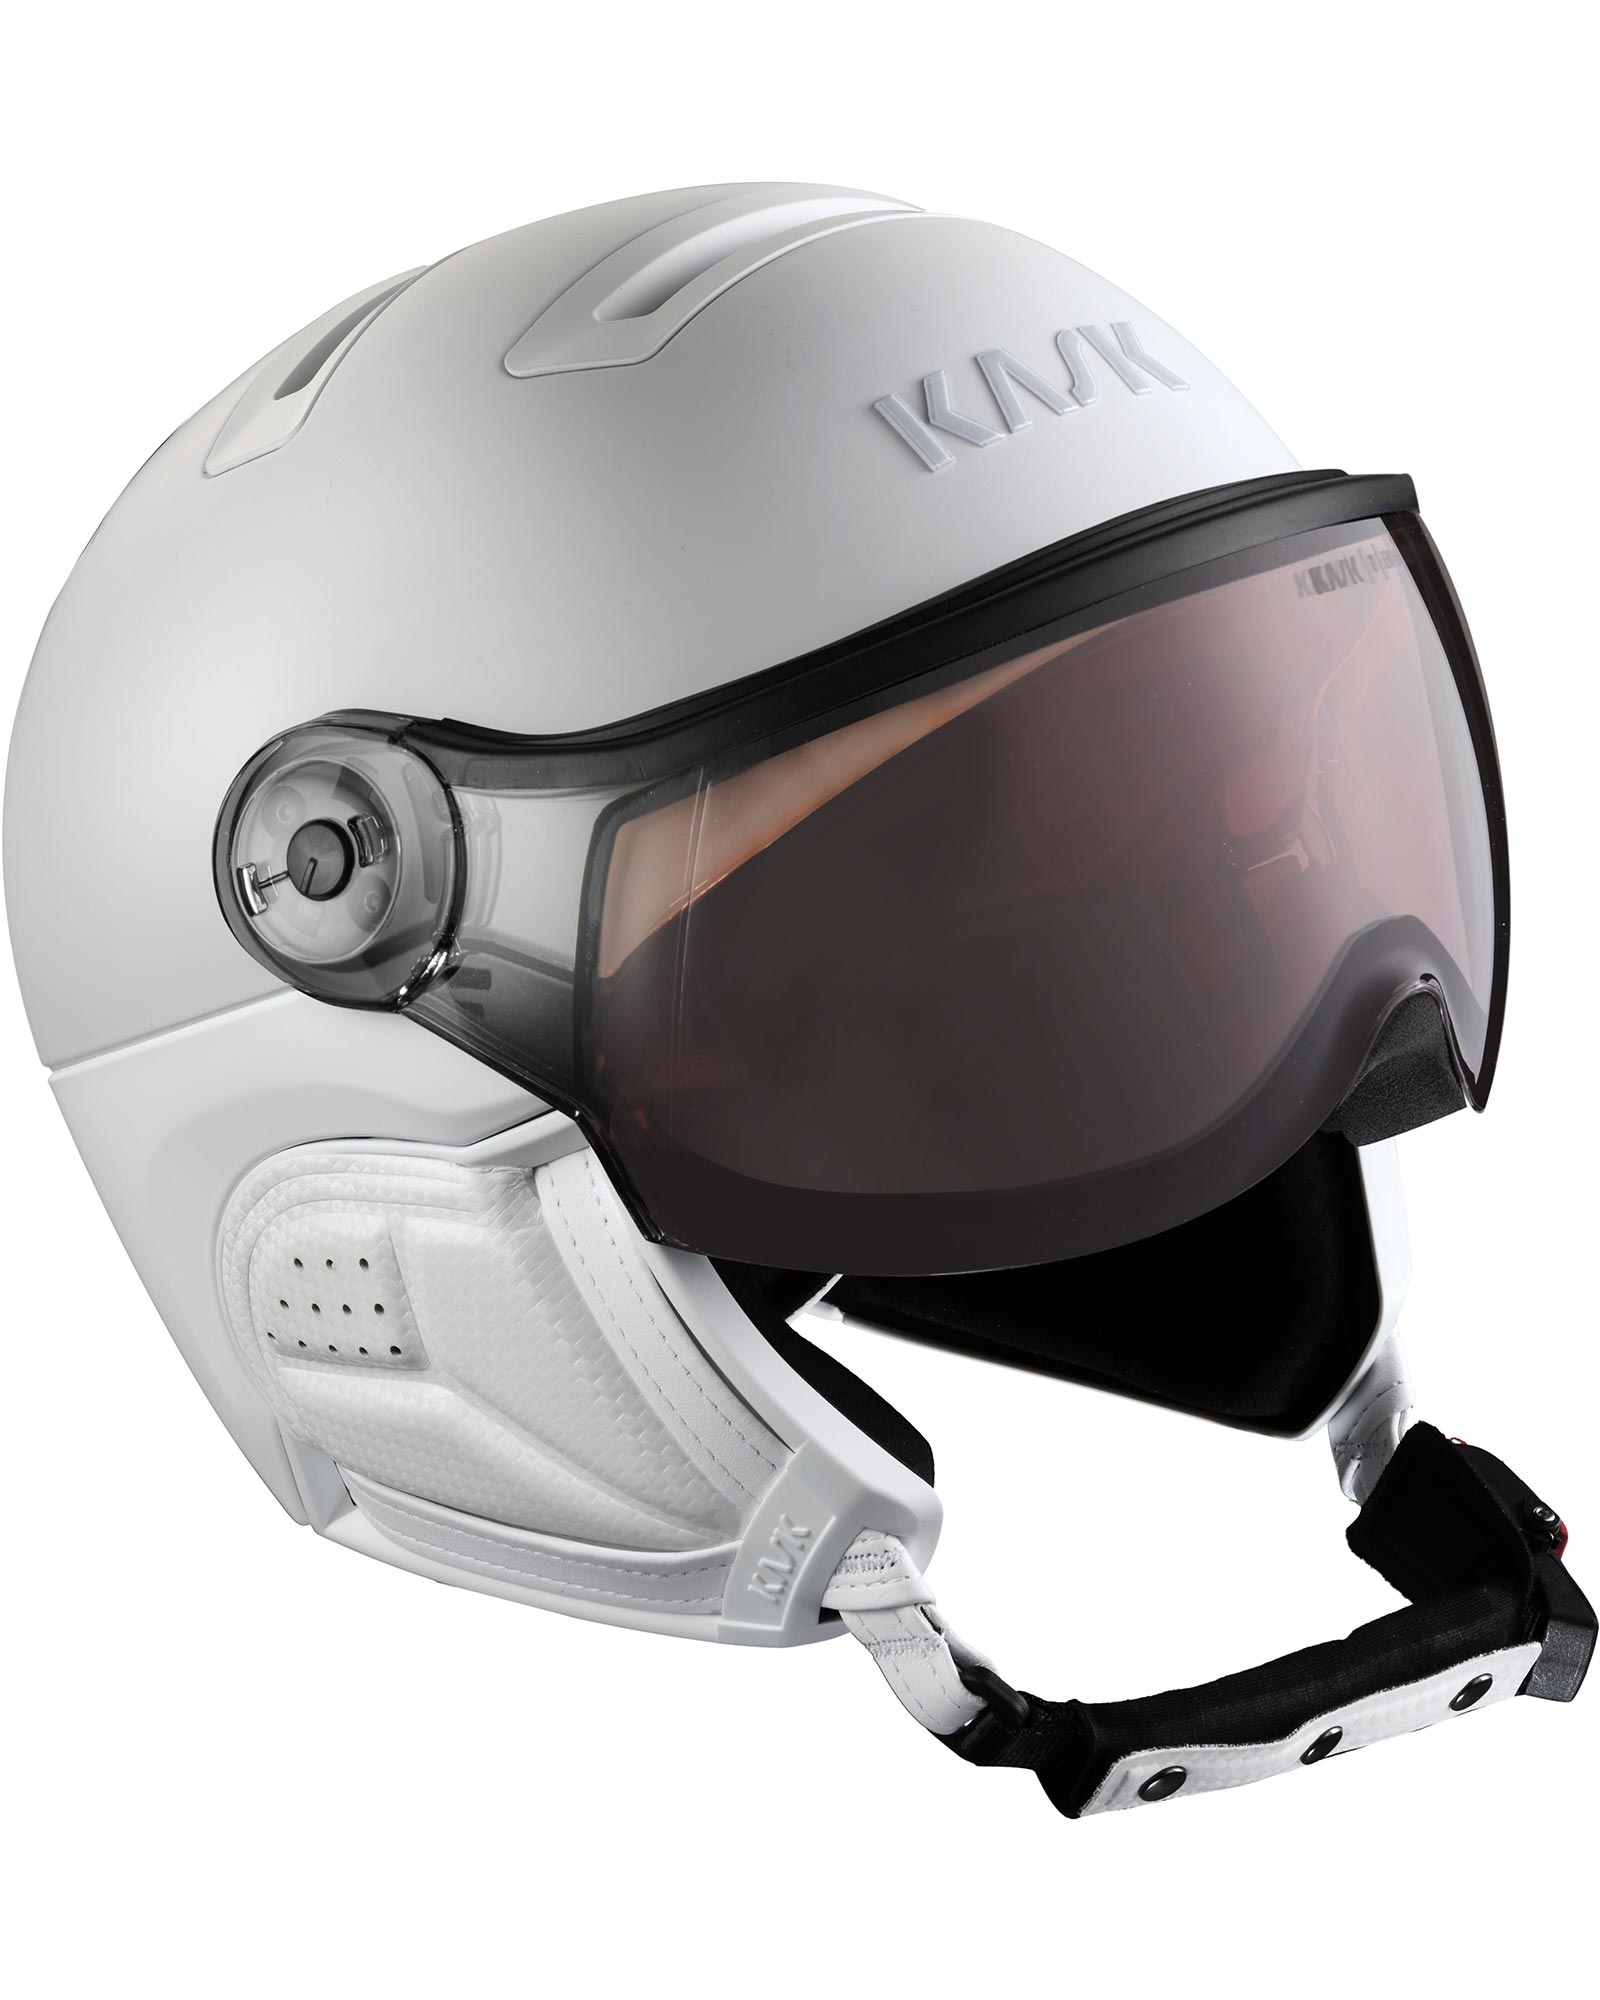 Ski Helmet Safety Helmet with Goggles Integrated Male and Female Protective Ski Helmet 